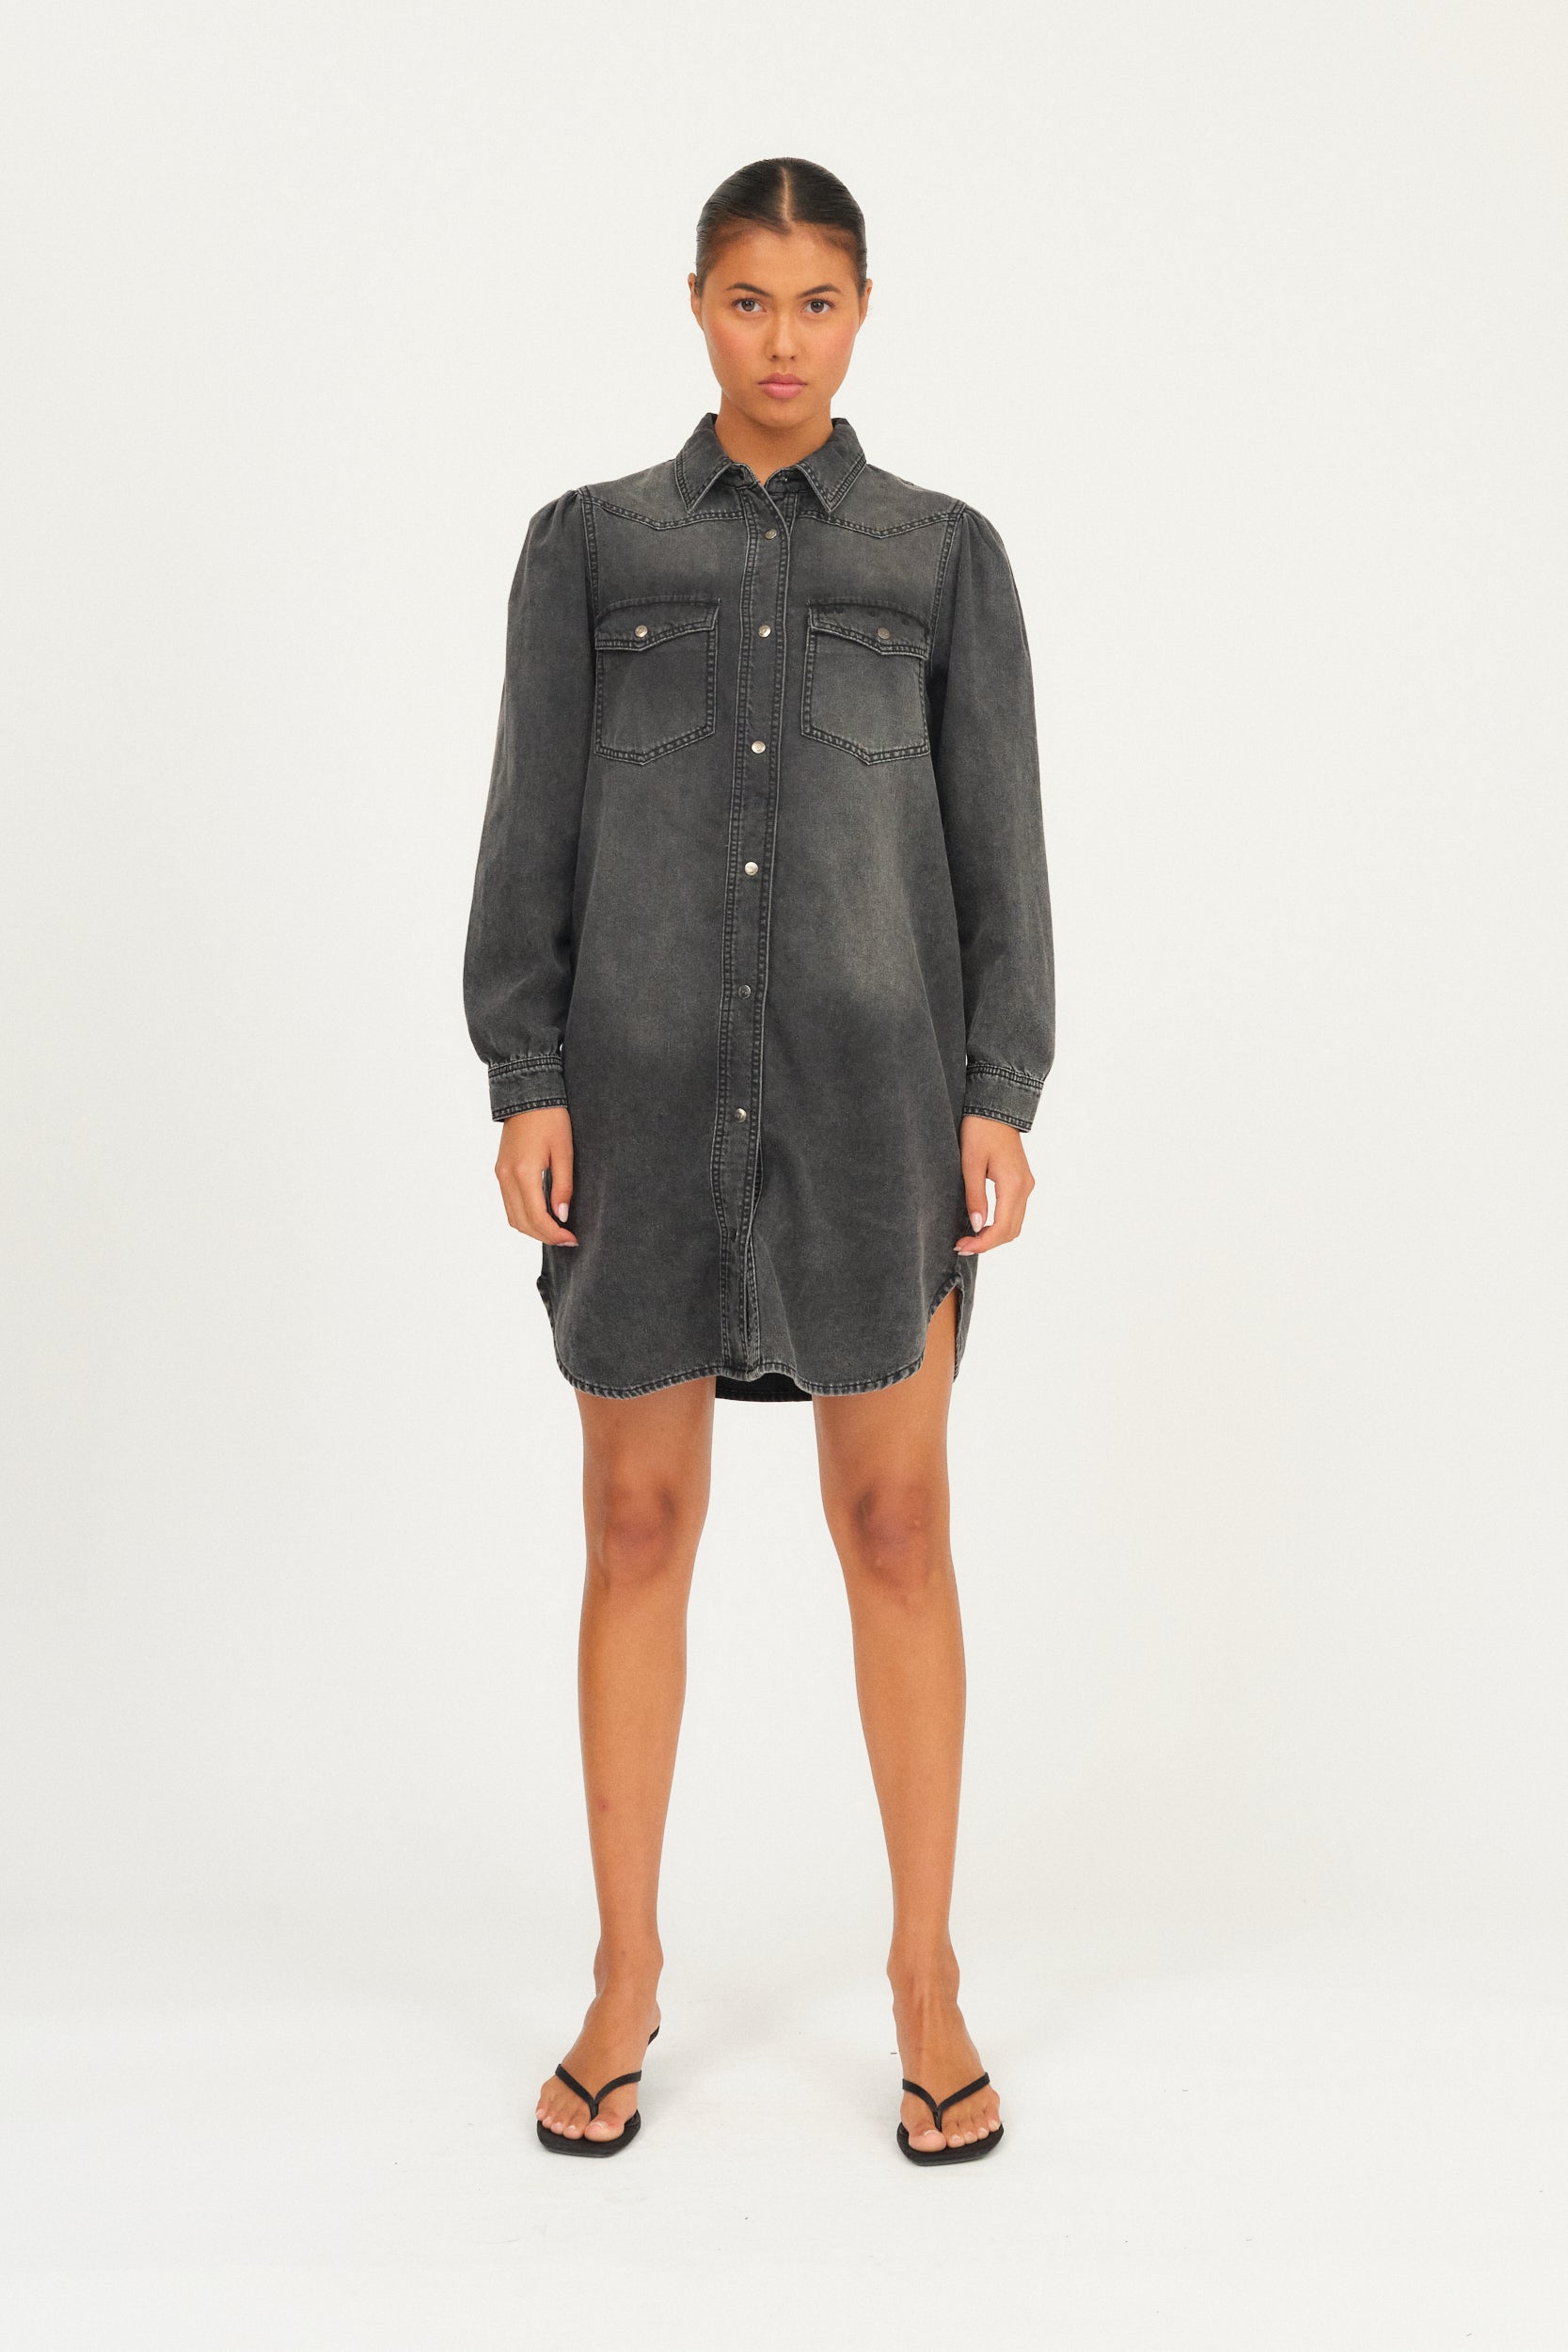 NWT UNIVERSAL STANDARD Black/Gray HANNAH DENIM SHIRT DRESS Oversized Fit XS  | eBay